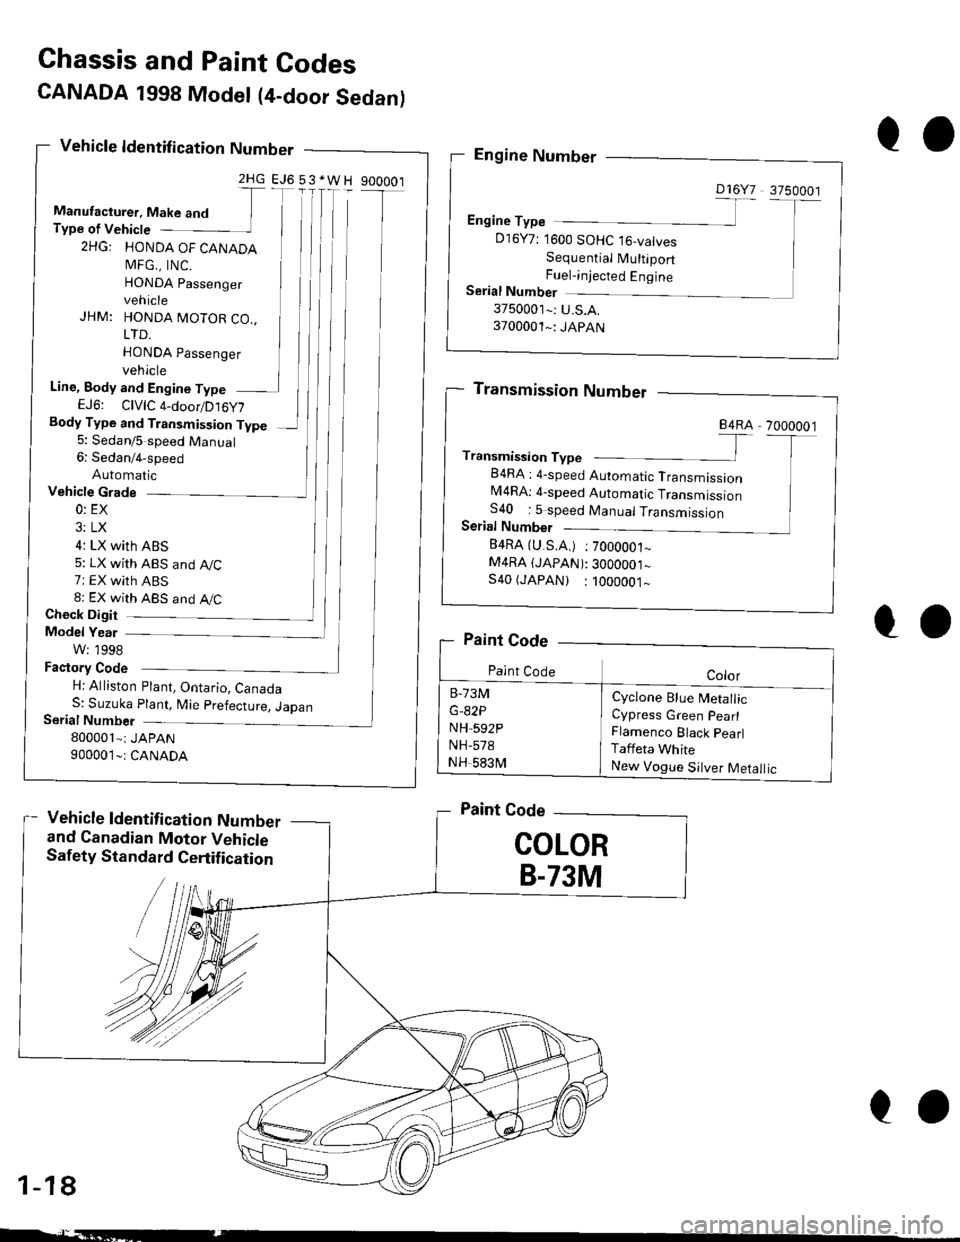 HONDA CIVIC 1998 6.G Workshop Manual CANADA 1998 Model (4-door Sedanl
Vehicle ldentification Number
Chassis and Paint Codes
2HG.I
Manufacturer, Make andType of Vehicte I2HG: HONDA OF CANADA ]MFG,, INC.
HONDA passenger lvehicle
JHM: HONDA